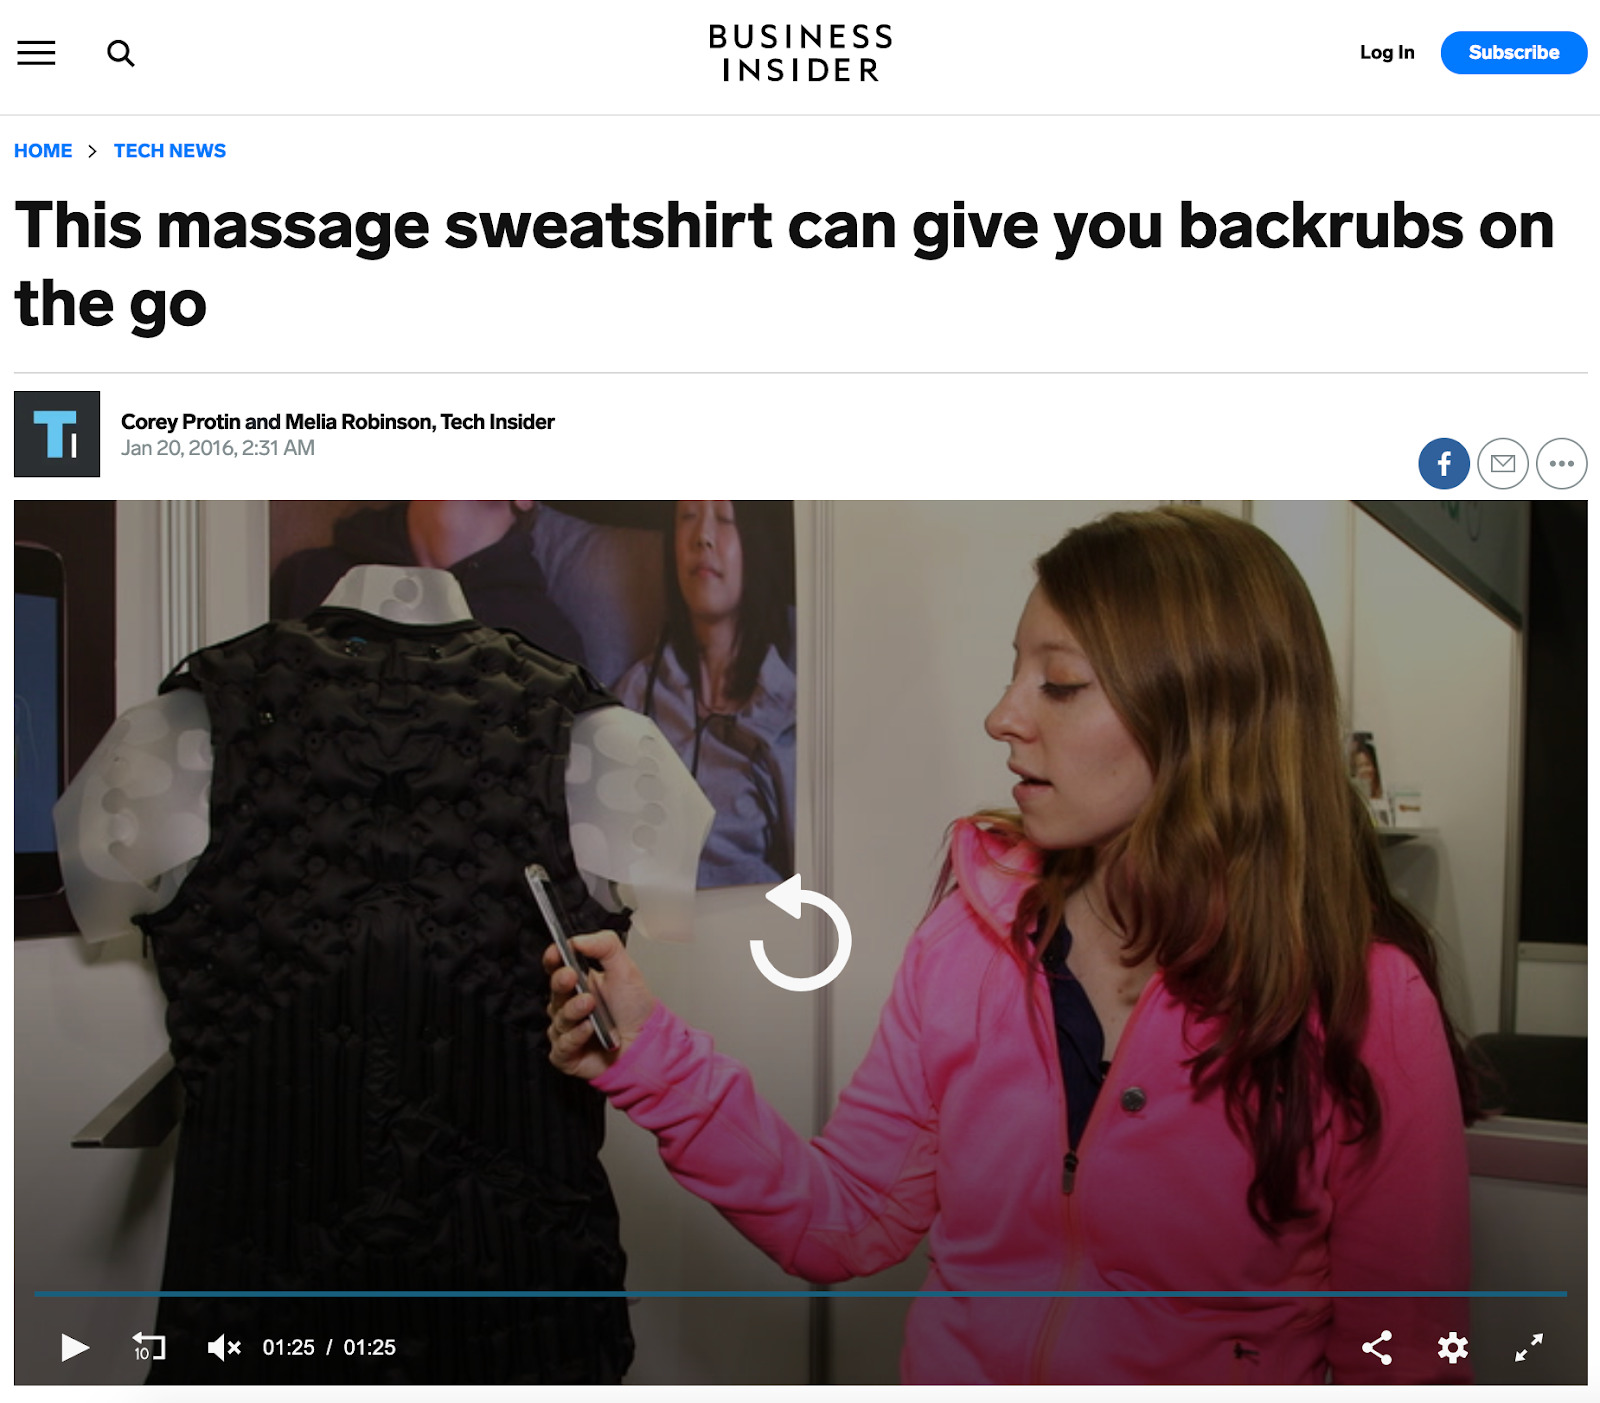 TWare massage sweatshirt gives backrubs Business Insider 1